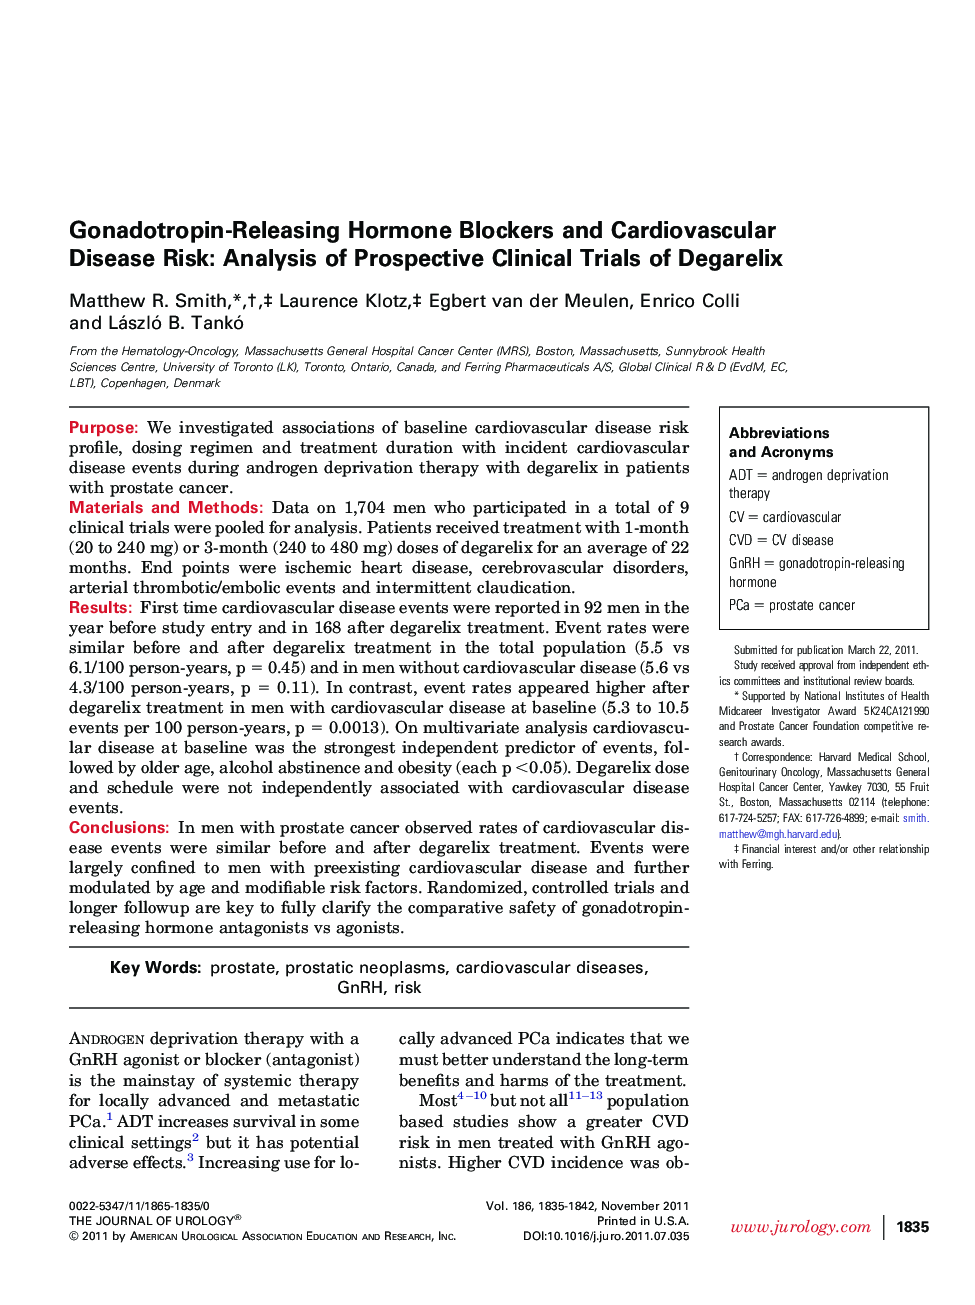 Gonadotropin-Releasing Hormone Blockers and Cardiovascular Disease Risk: Analysis of Prospective Clinical Trials of Degarelix 